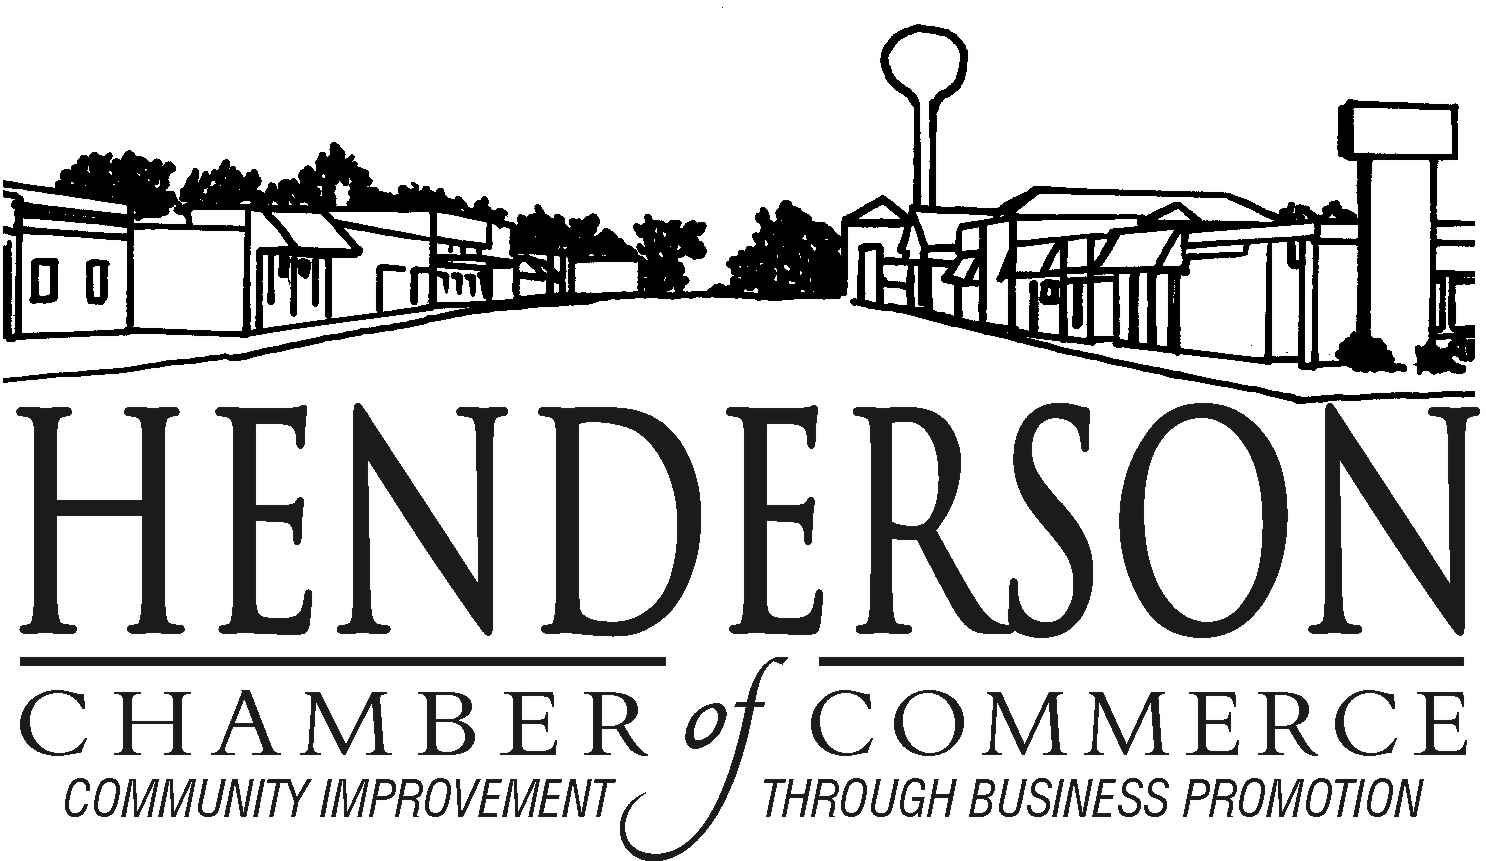 Henderson Chamber of Commerce's Image